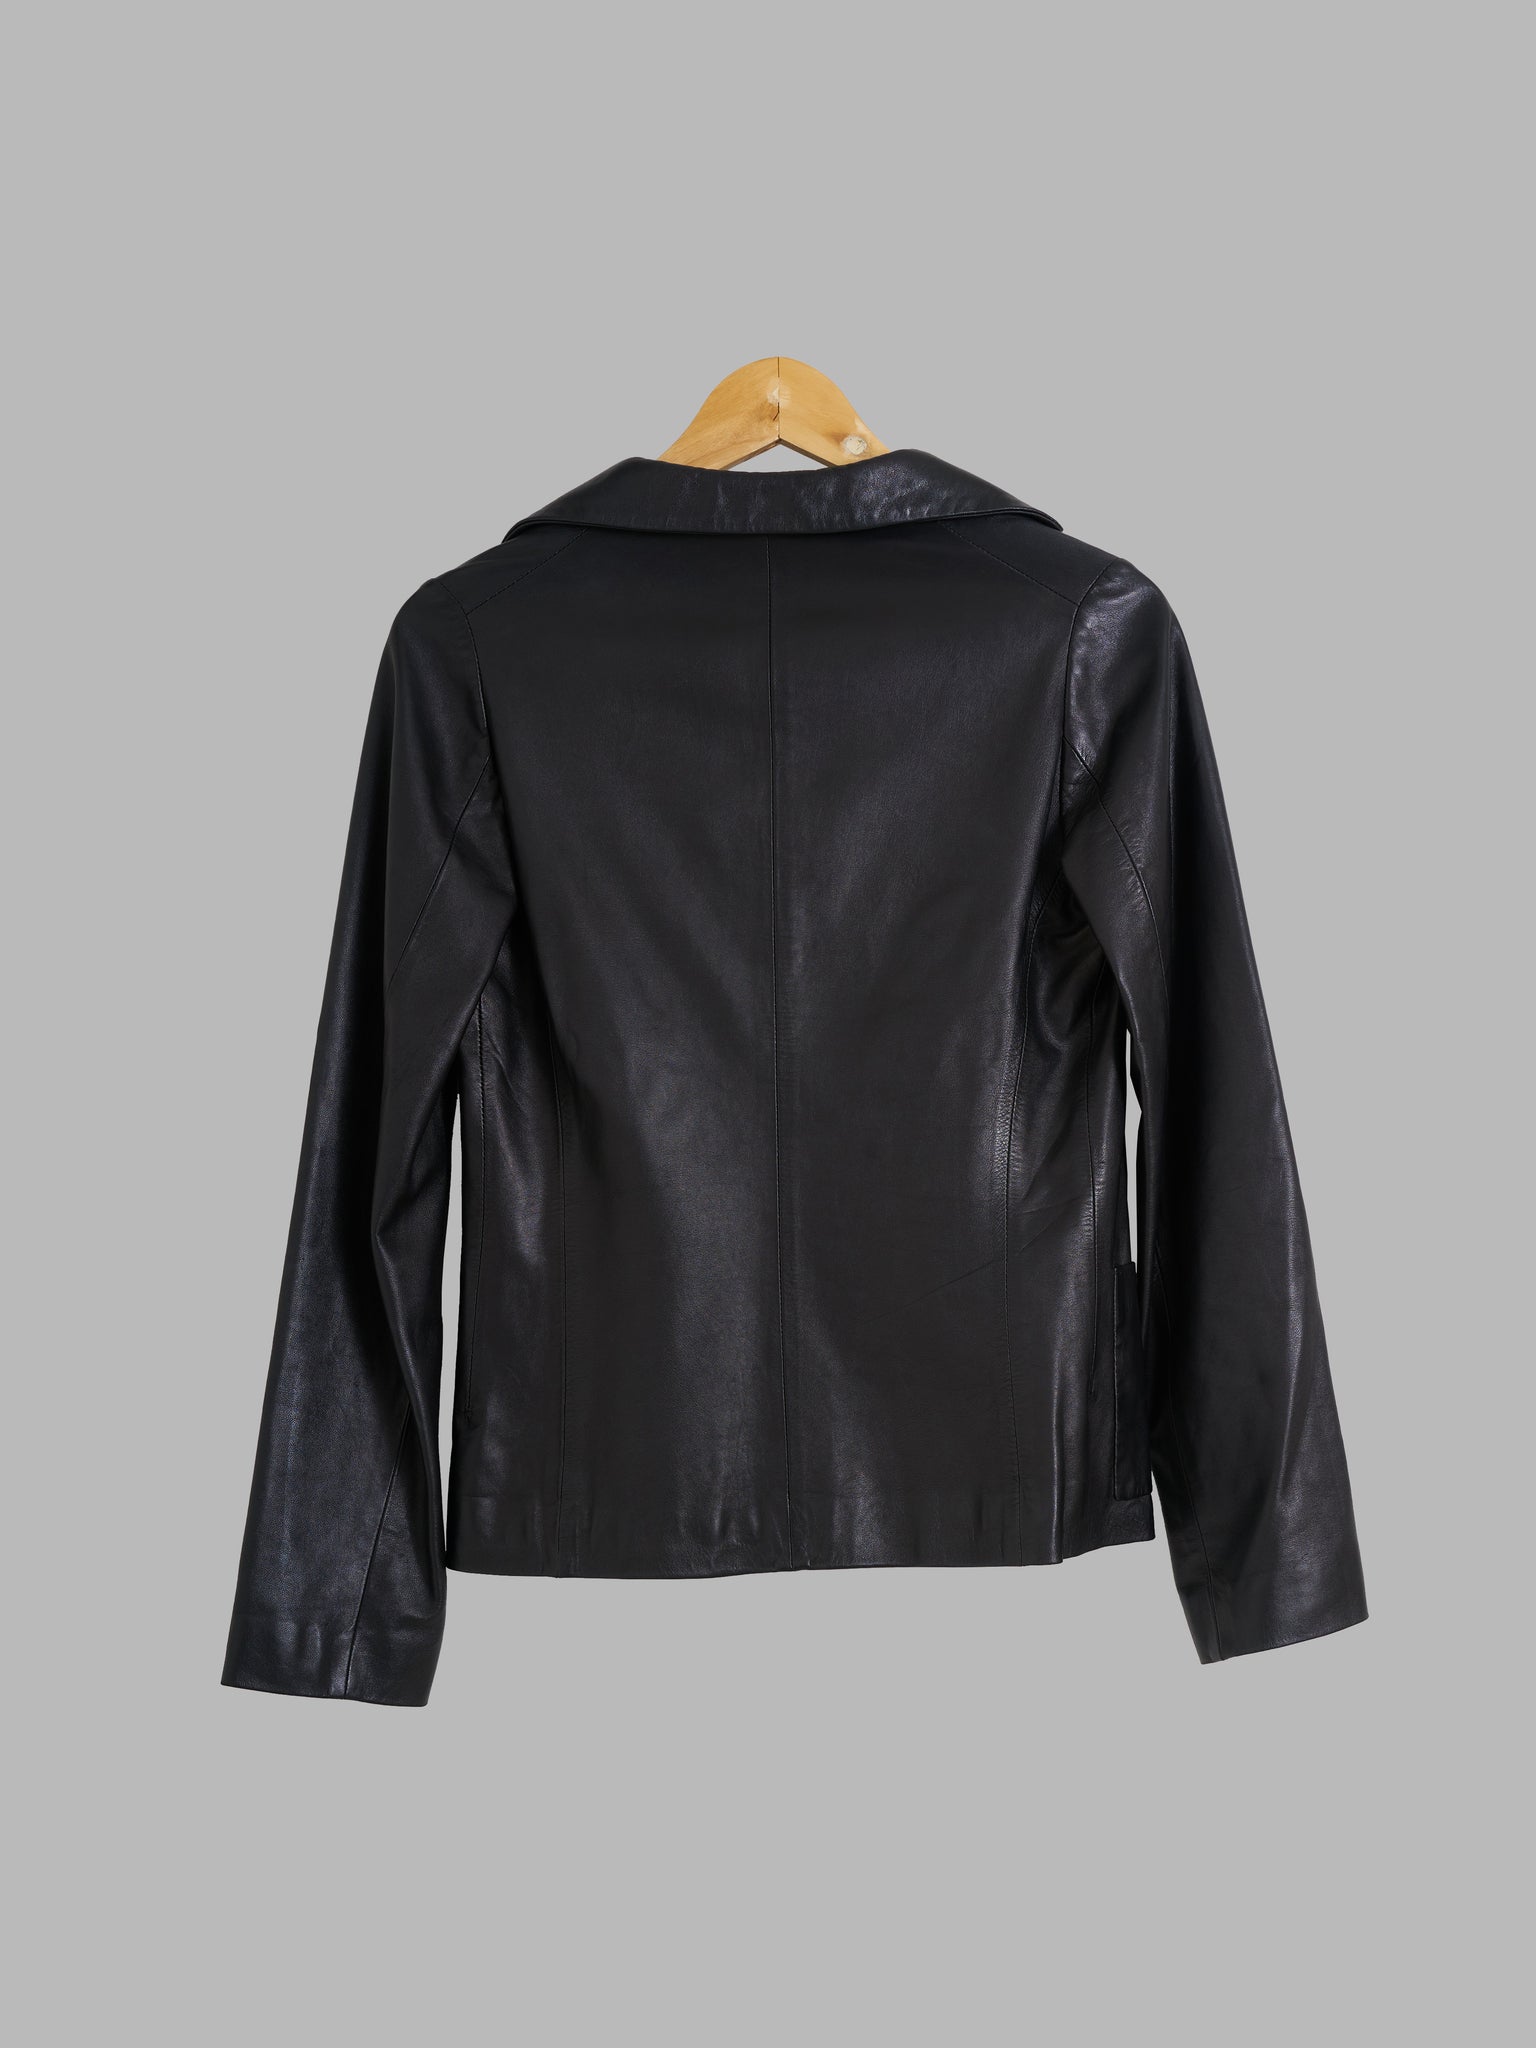 Jil Sander black leather 2 button blazer - size 34